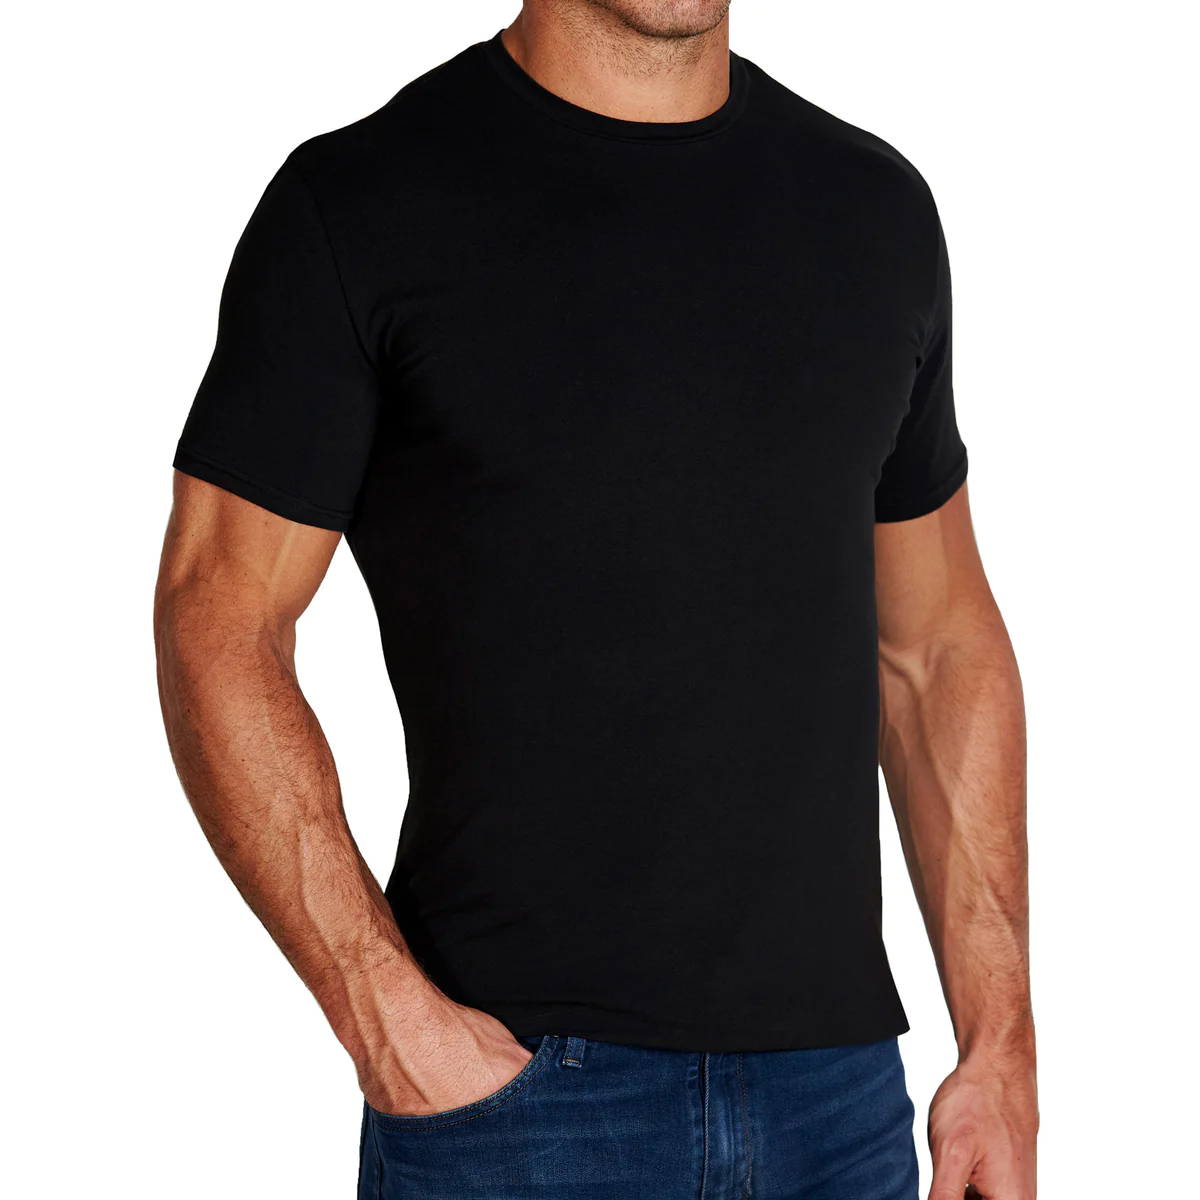 THE WESTPORT BLACK SHORT SLEEVE Athletic fit CREWNECK T Shirt